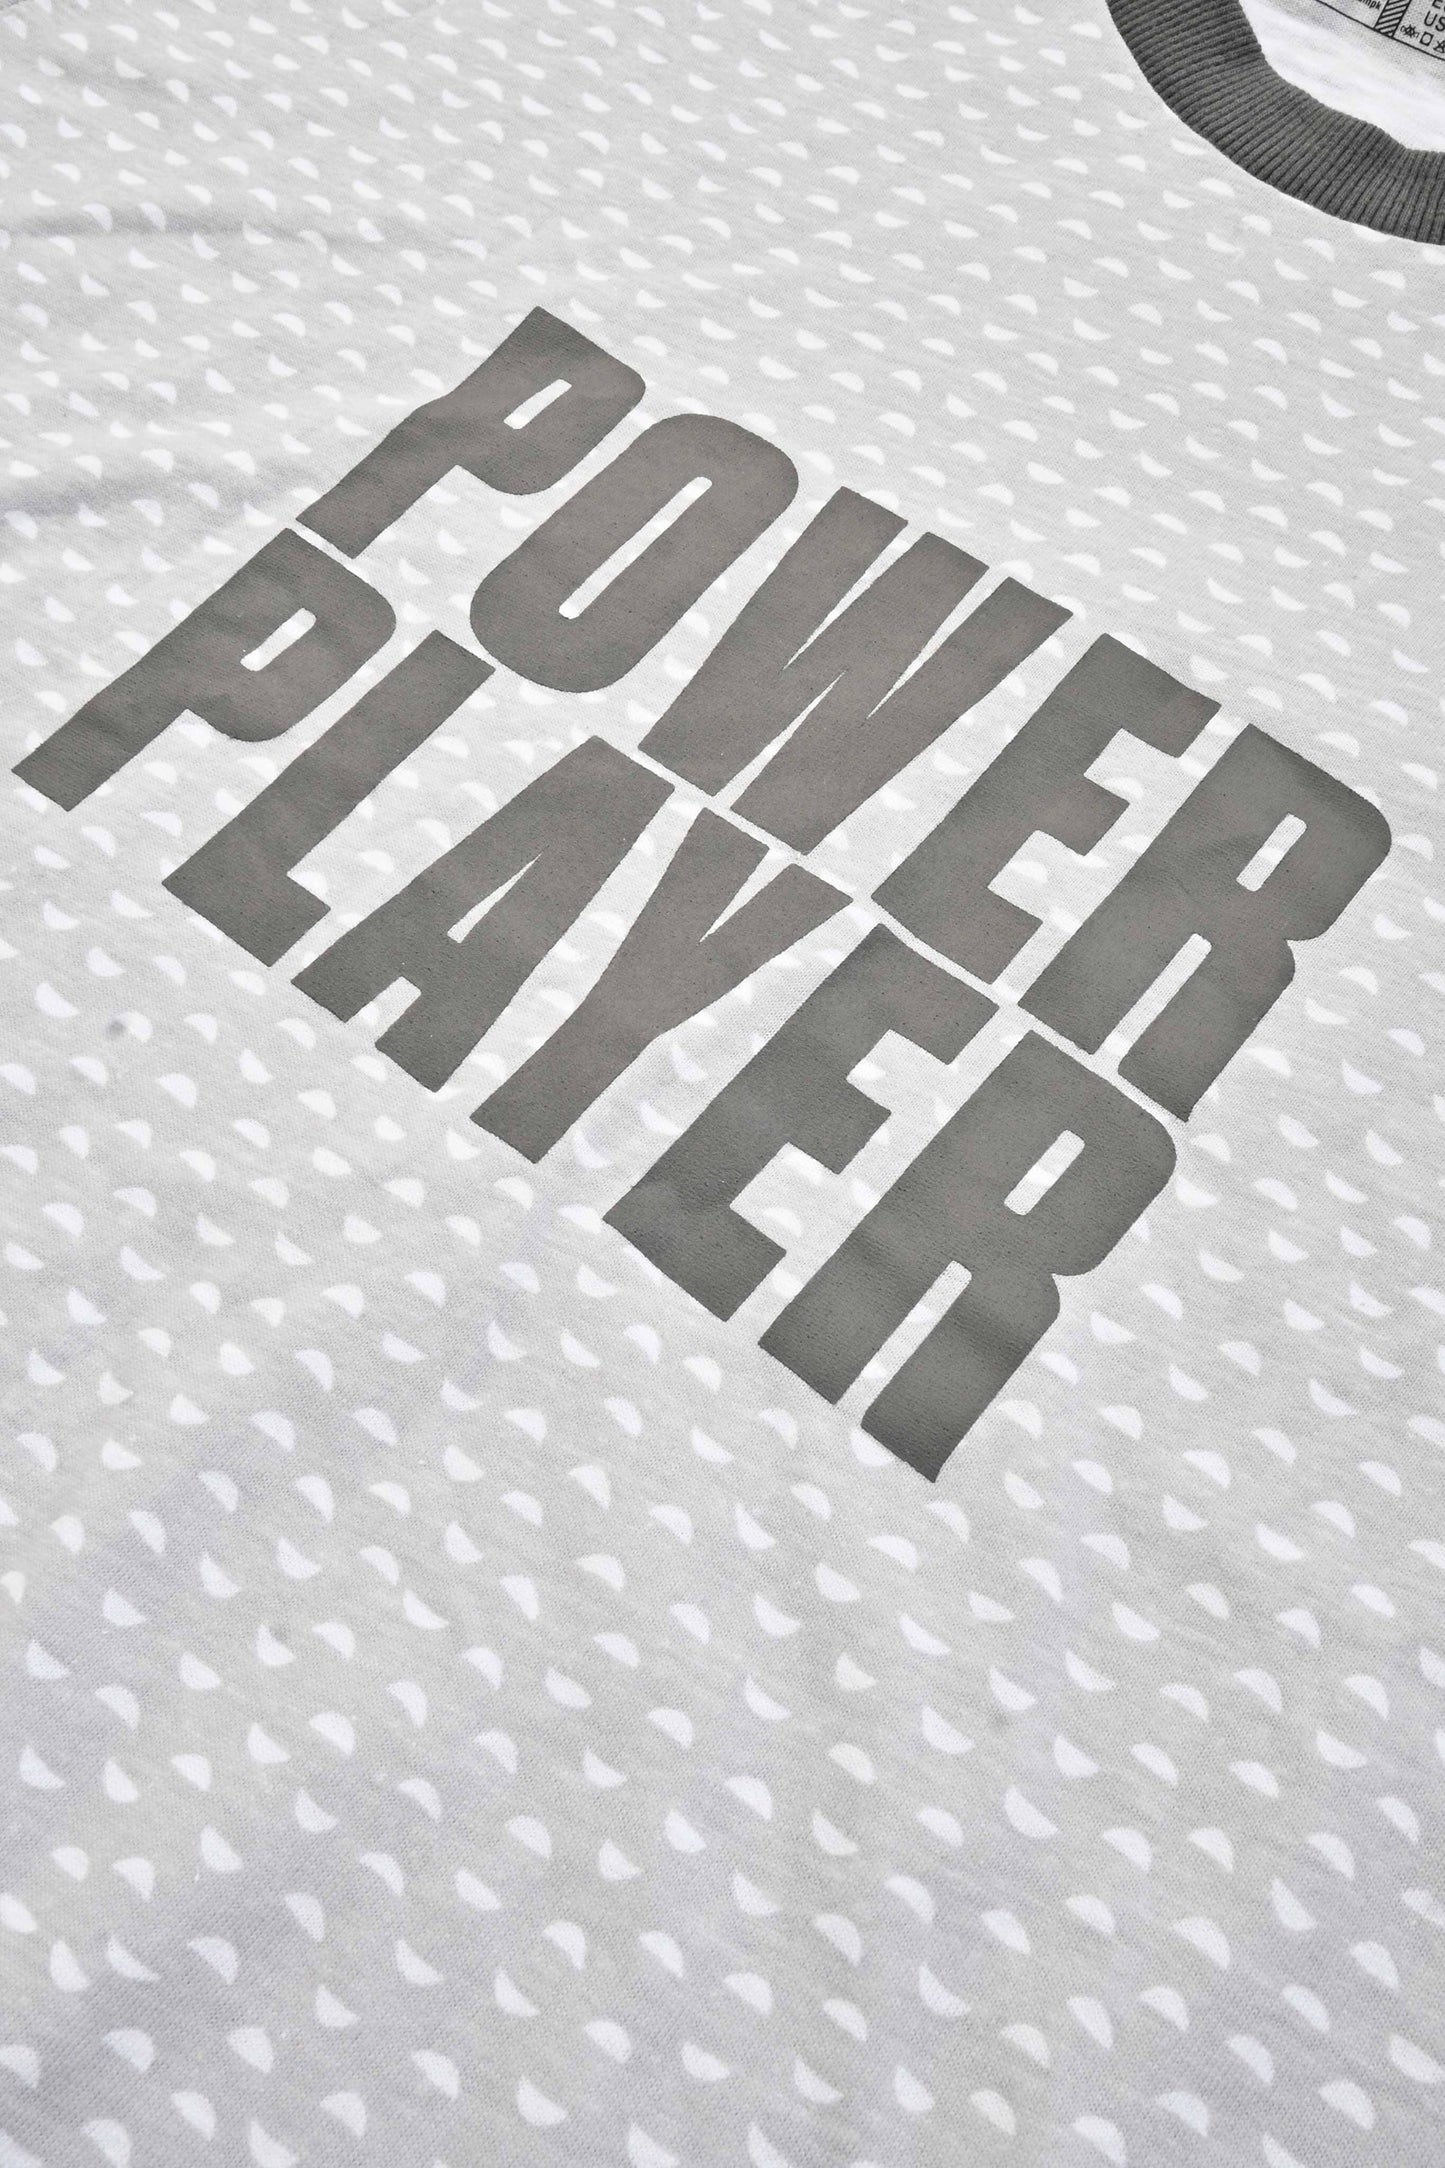 Max 21 Men's Power Player Printed Tee Shirt Men's Tee Shirt SZK 